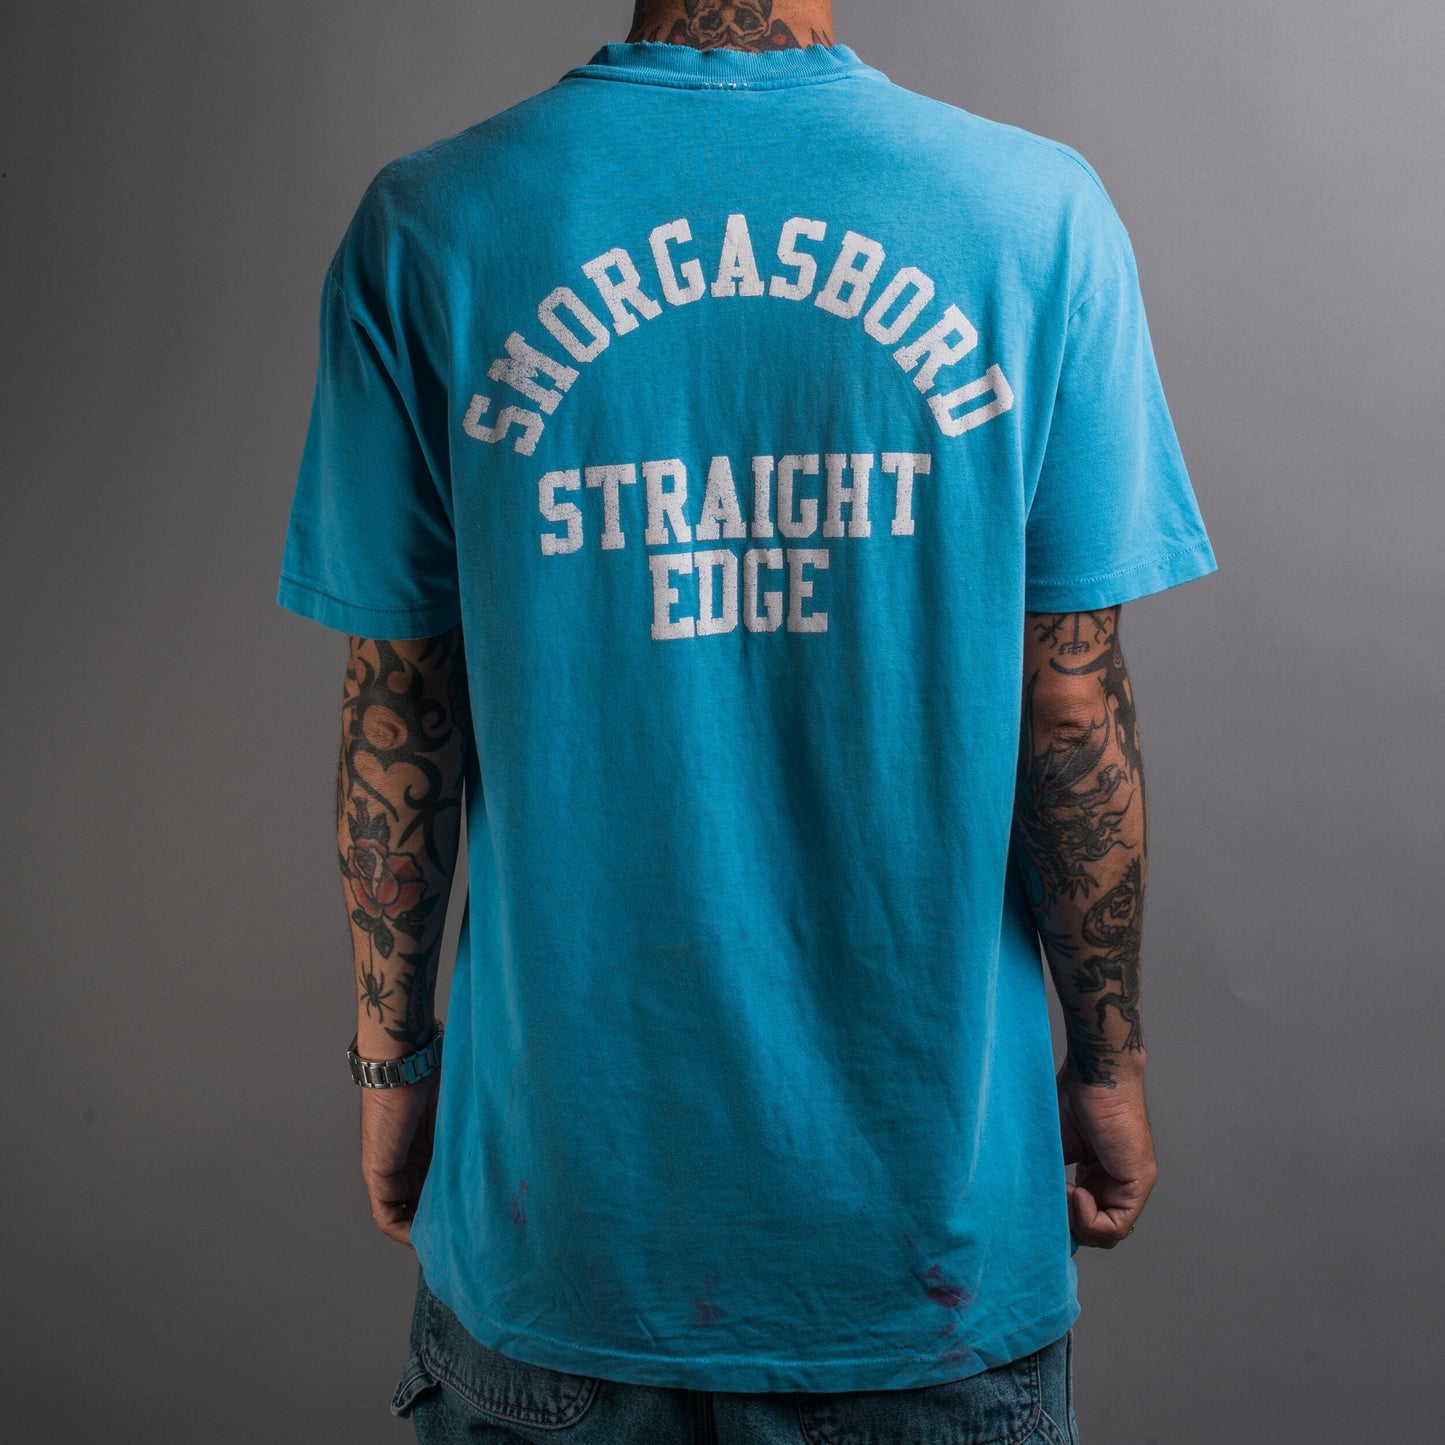 Vintage 90’s Smorgasbord Records T-Shirt